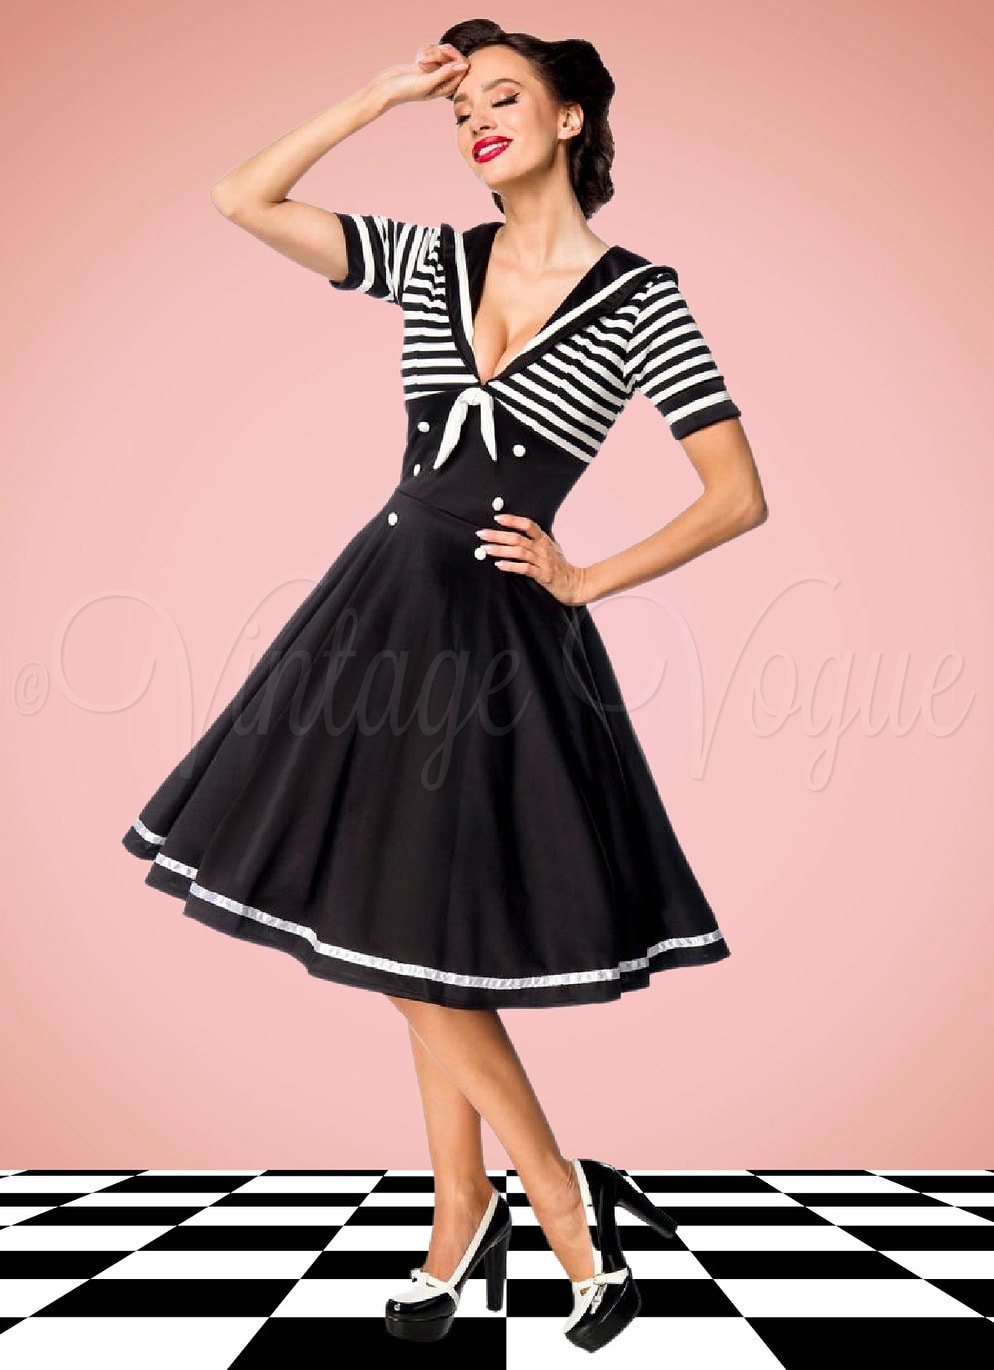 Belsira 50's Retro Matrosen Pin-Up Swing Kleid mit Streifen Muster in Schwarz Weiß Petticoat Damen Damenkleid Maritim Sailor